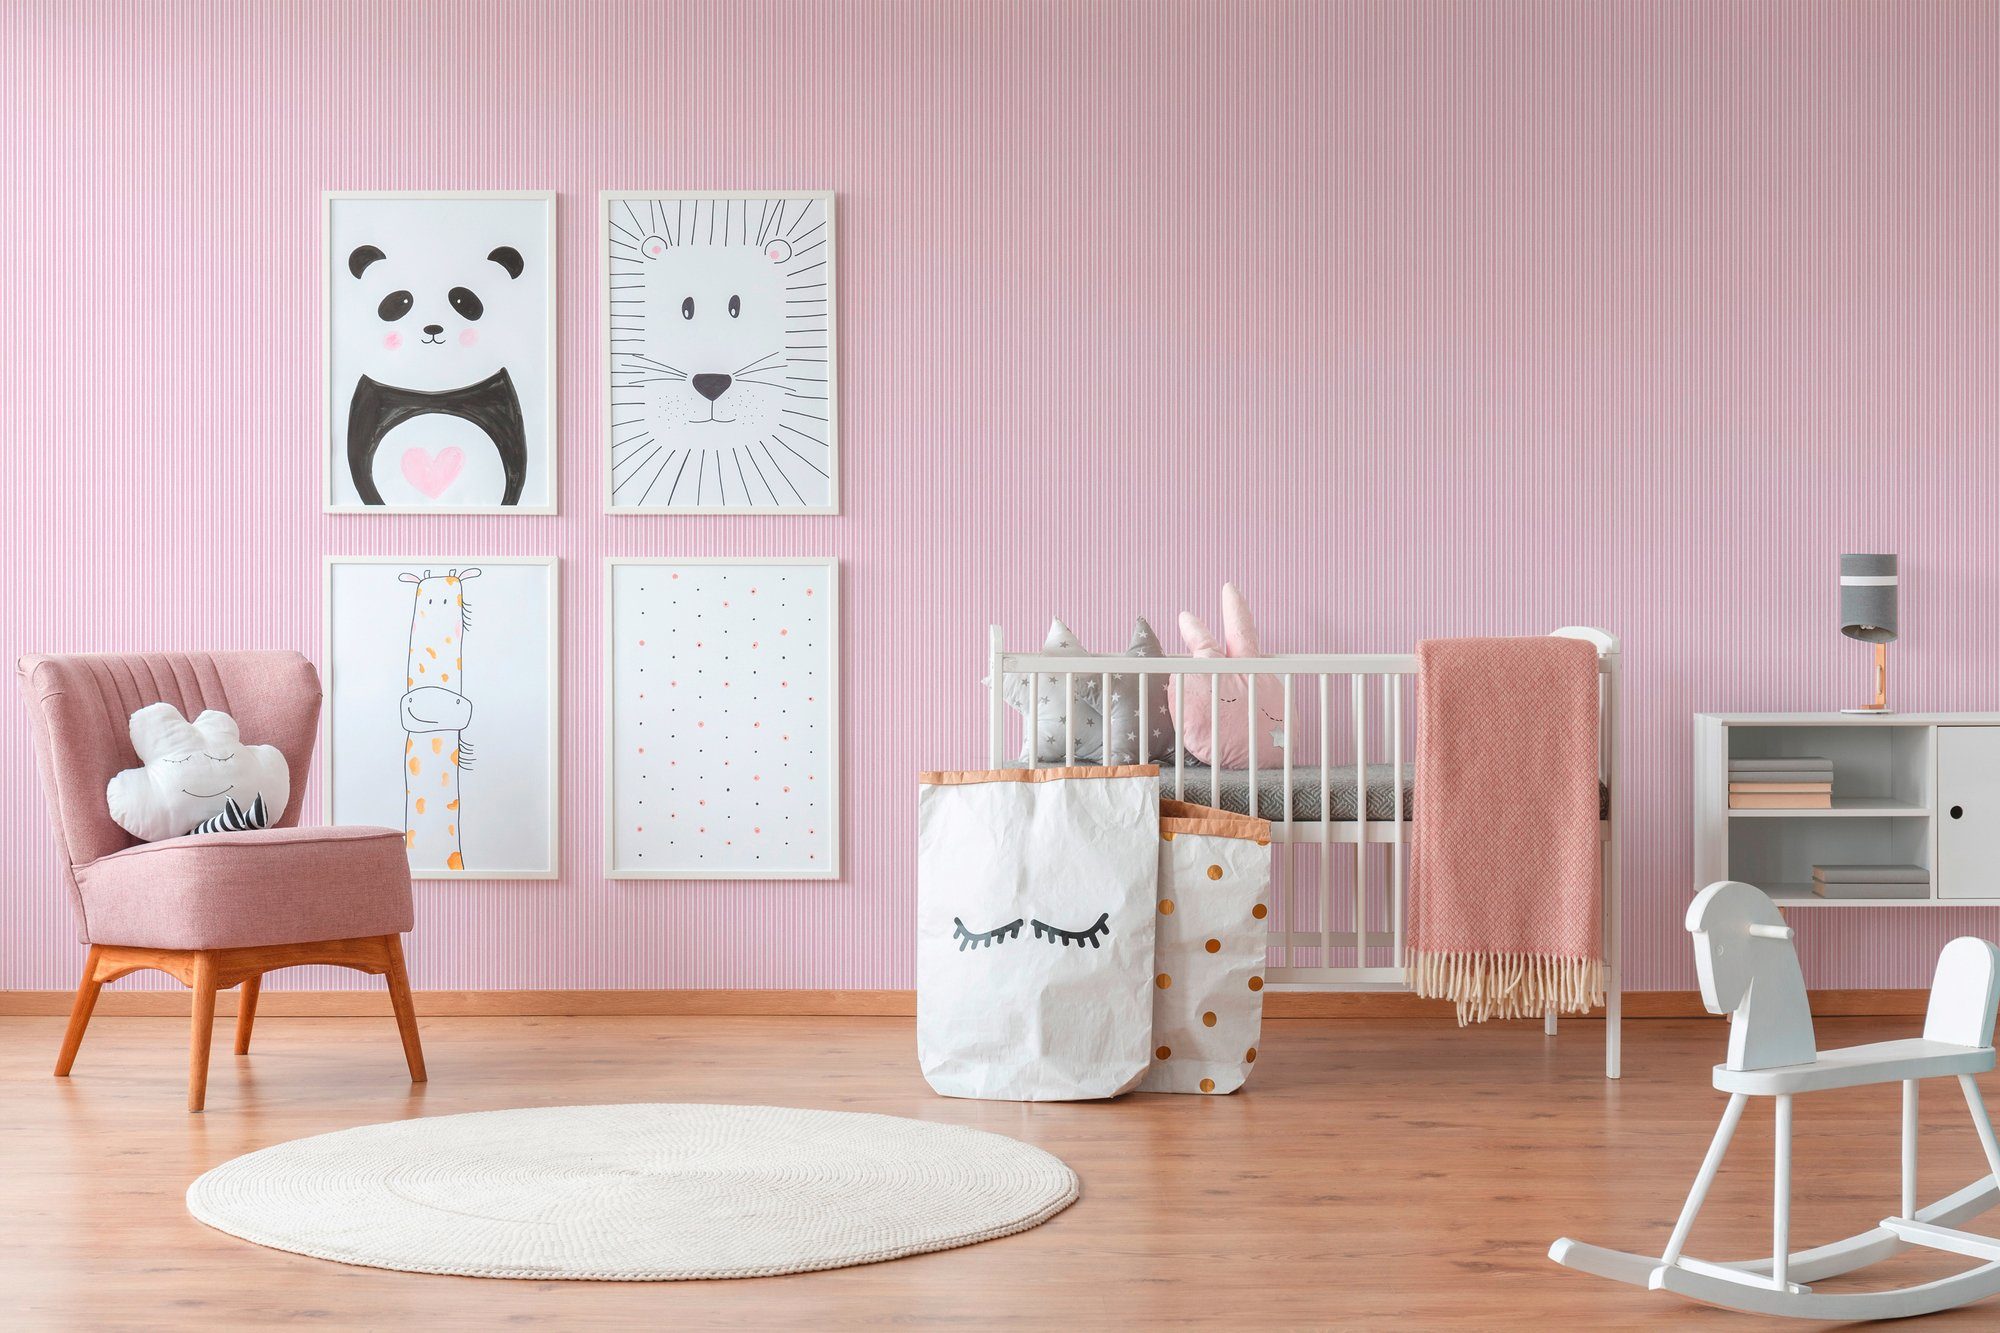 Tapete leicht K&L walls gestreift, Art St), glänzend, Streifen, geprägt, Vliestapete Streifen Kinderzimmer rosa längsgestreift, (1 living Little Stars, Wall